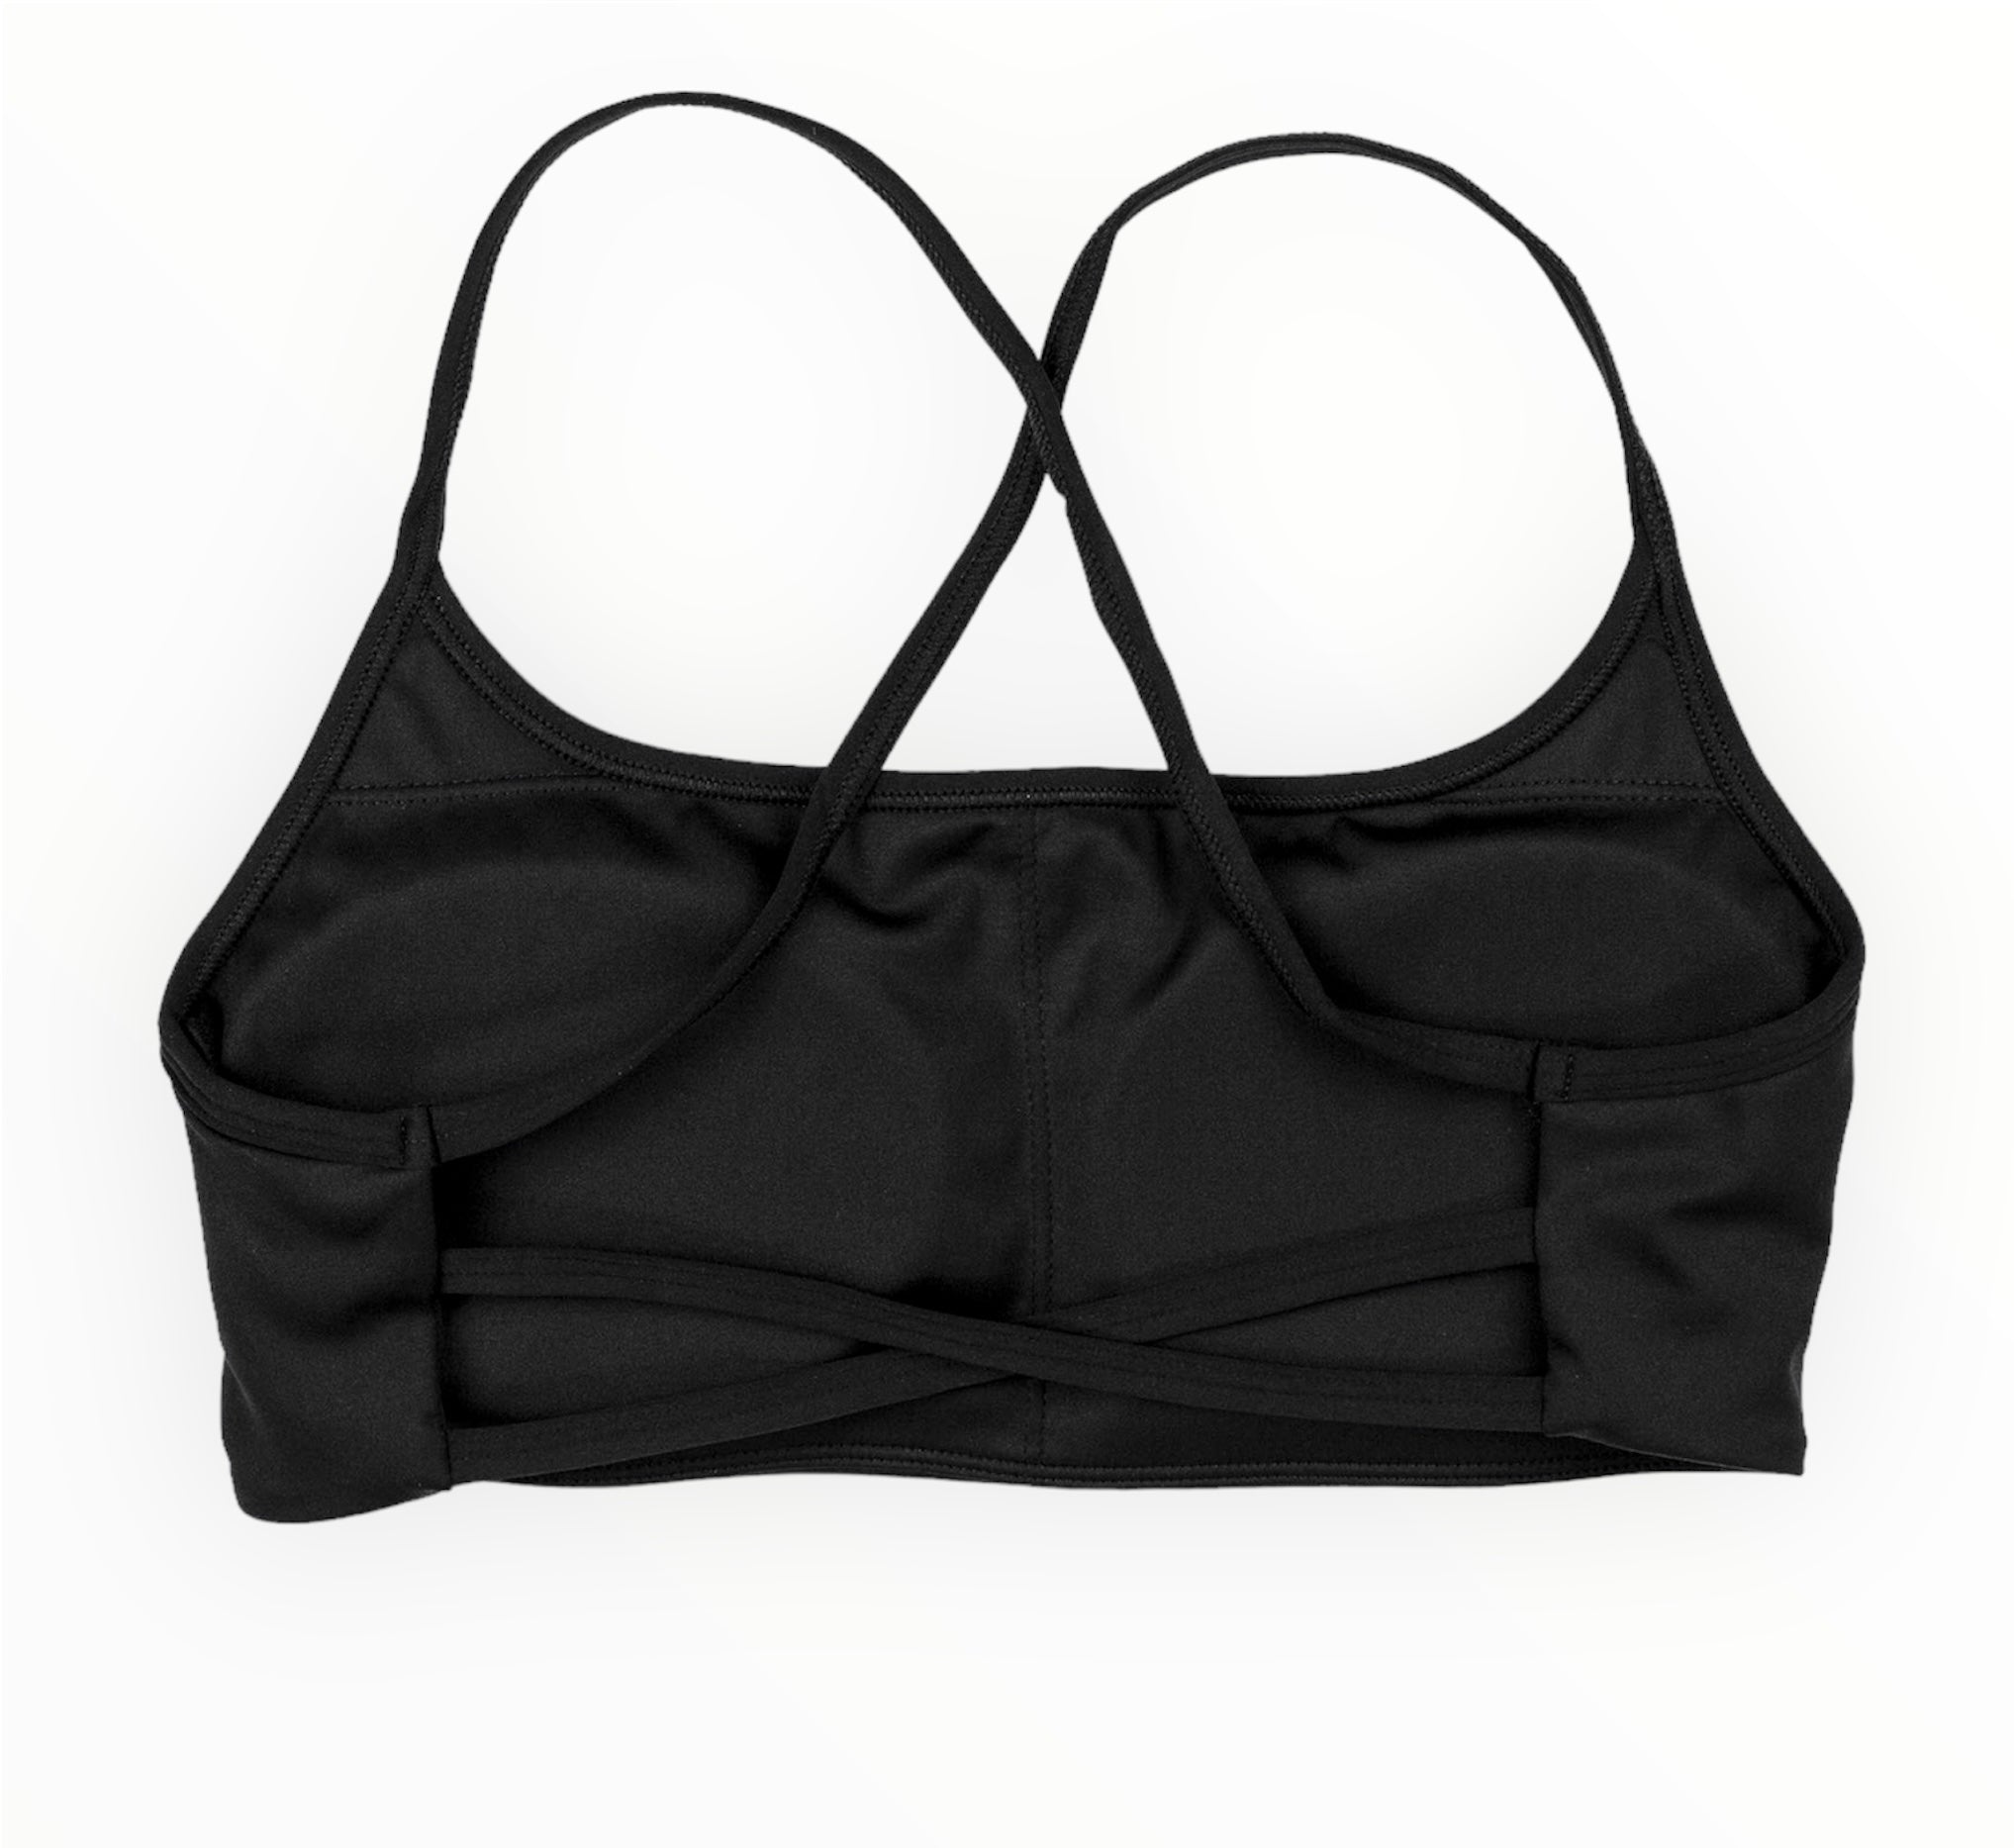 Black strappy bra